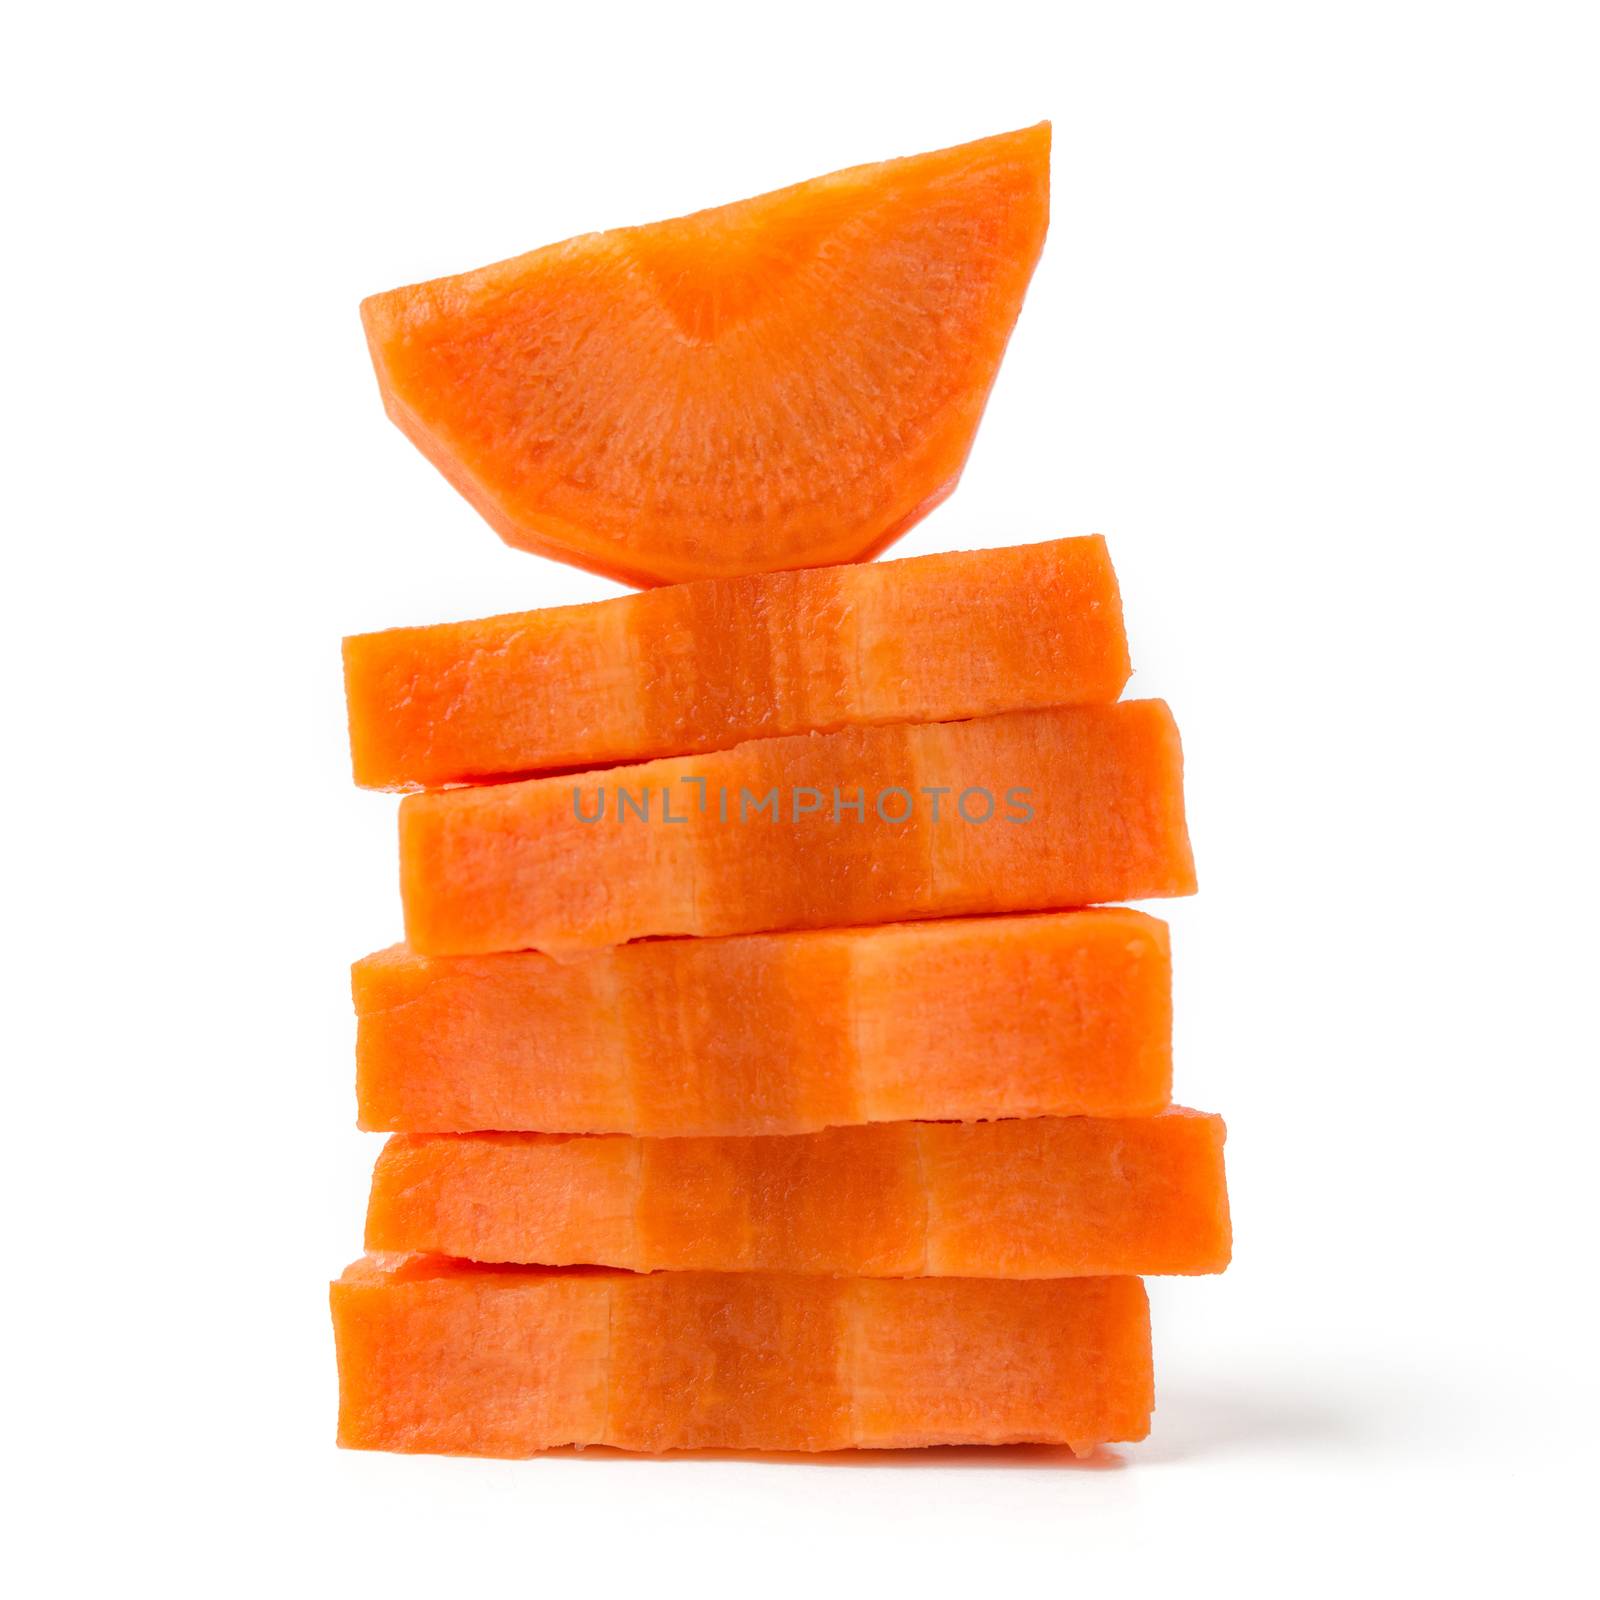 sliced carrots by antpkr